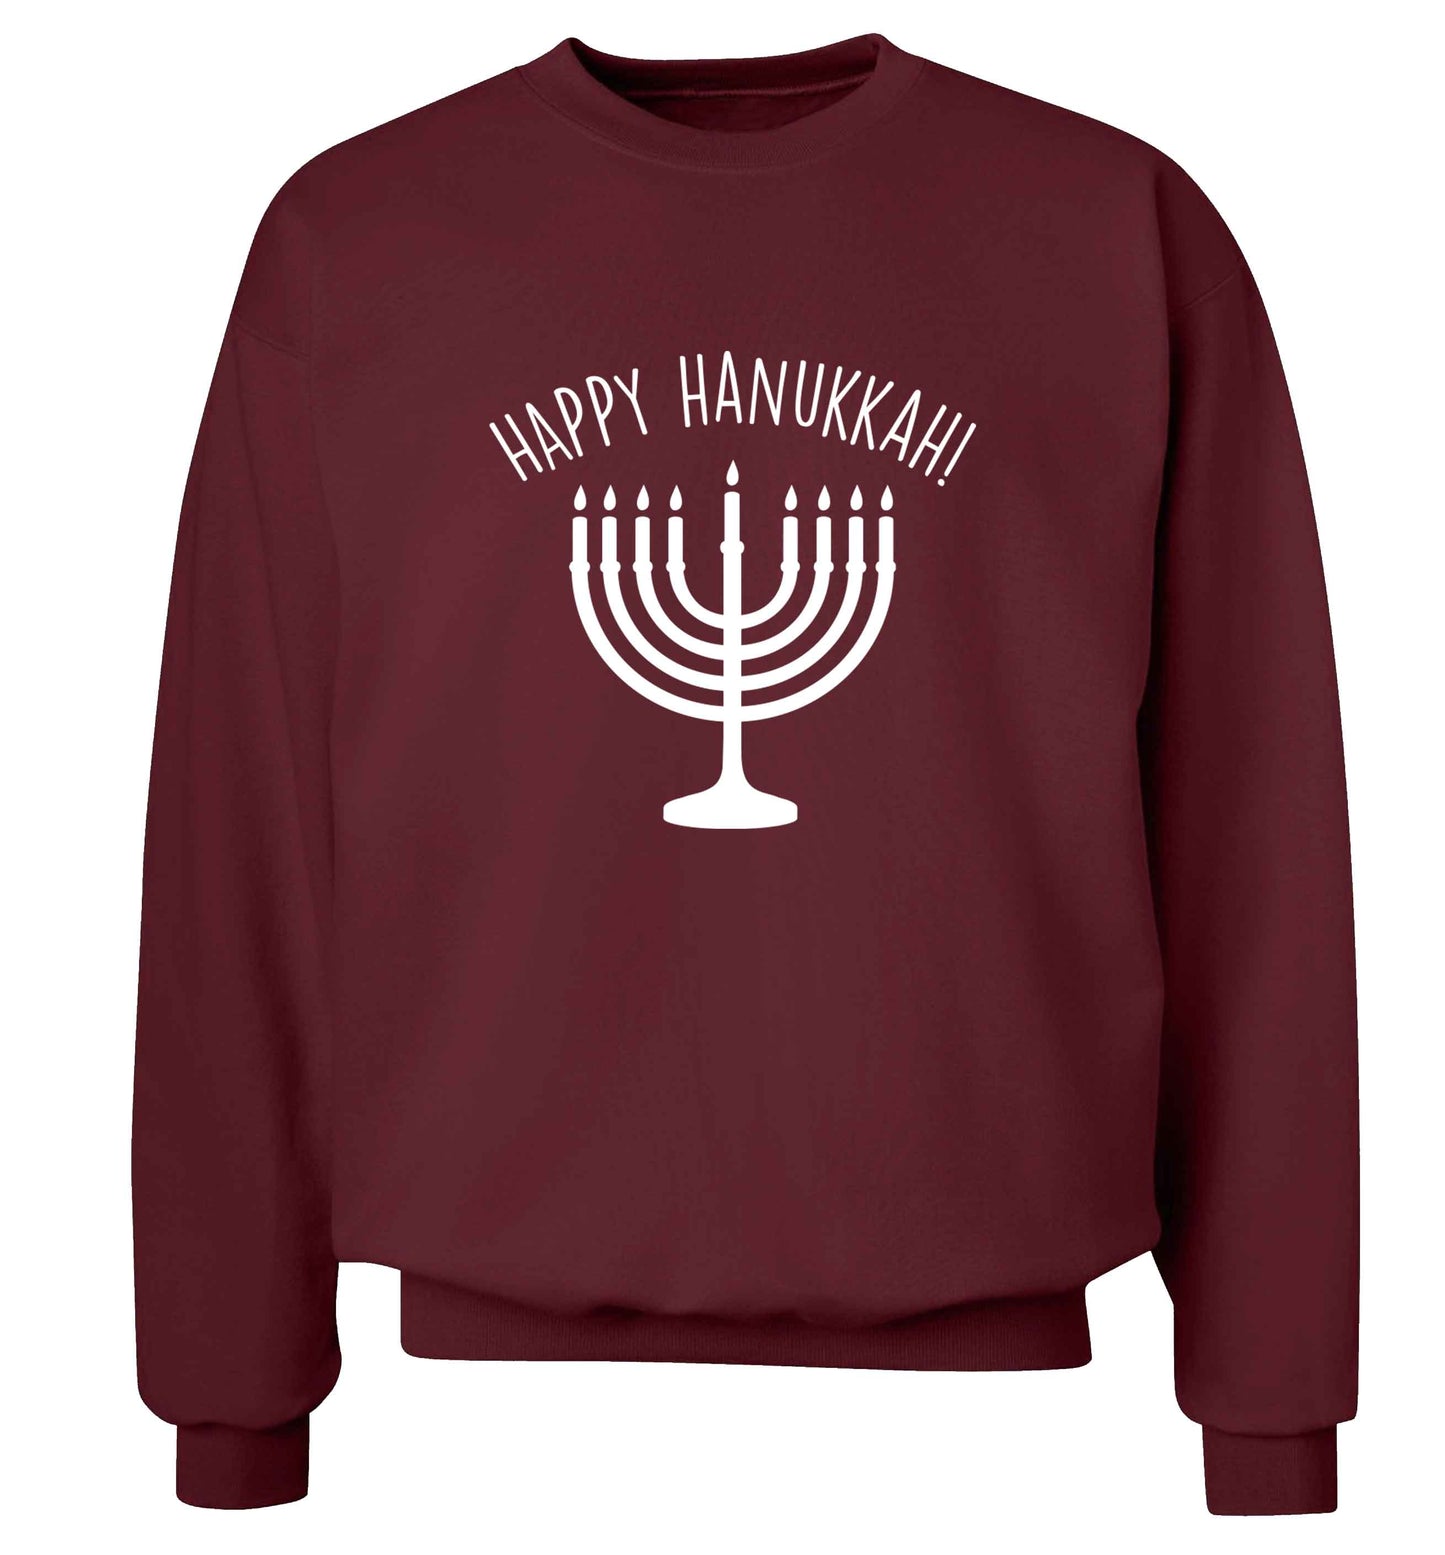 Happy hanukkah adult's unisex maroon sweater 2XL